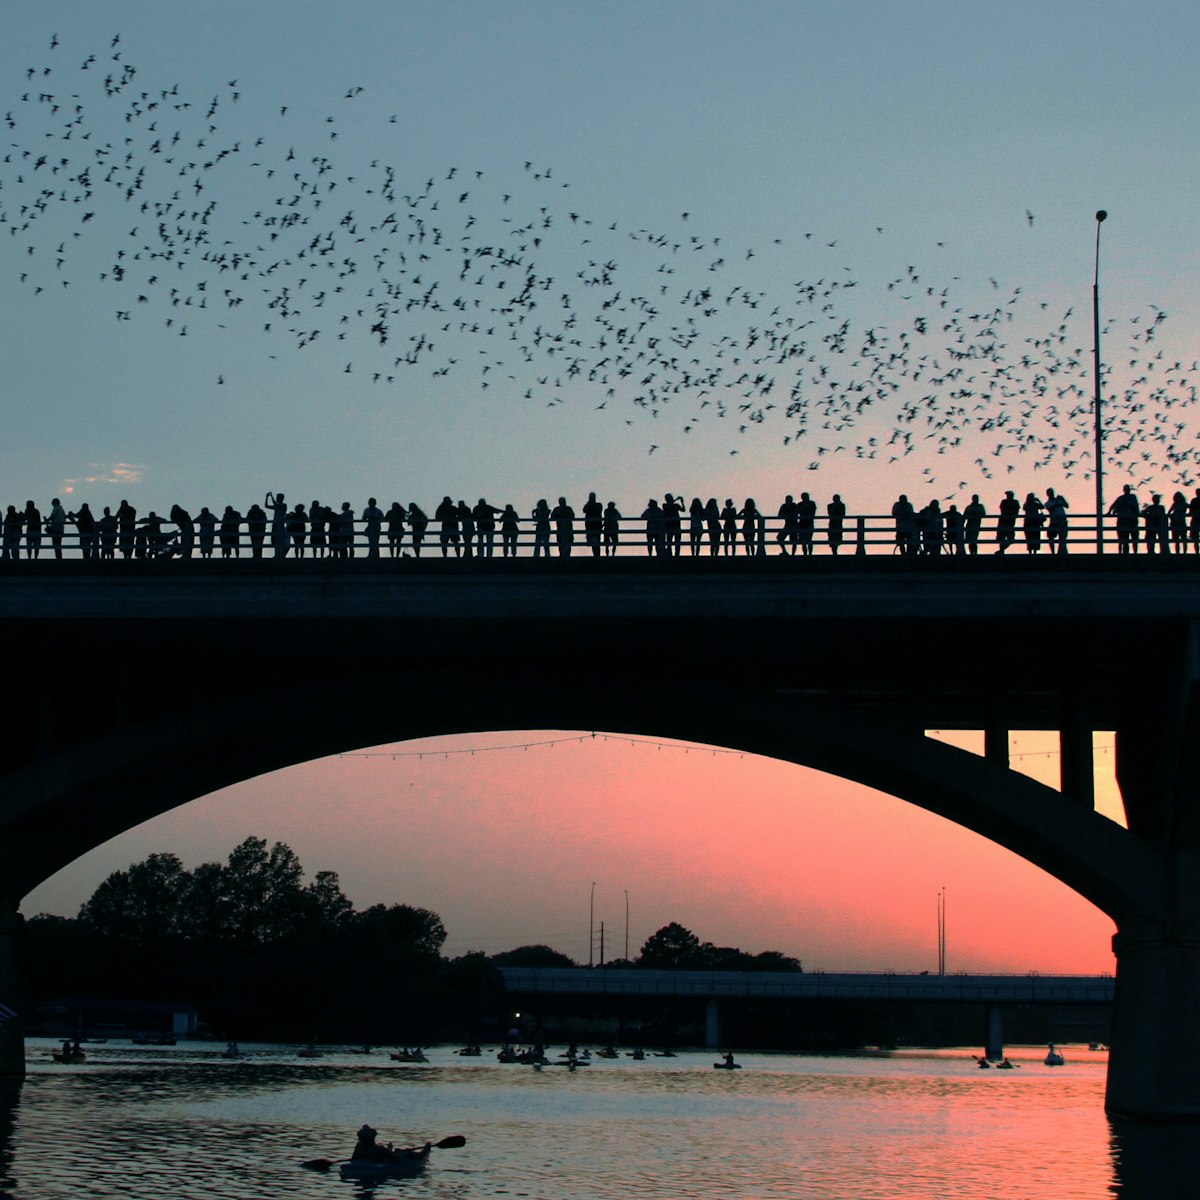 Congress Avenue Bridge bats in Austin during sunset.